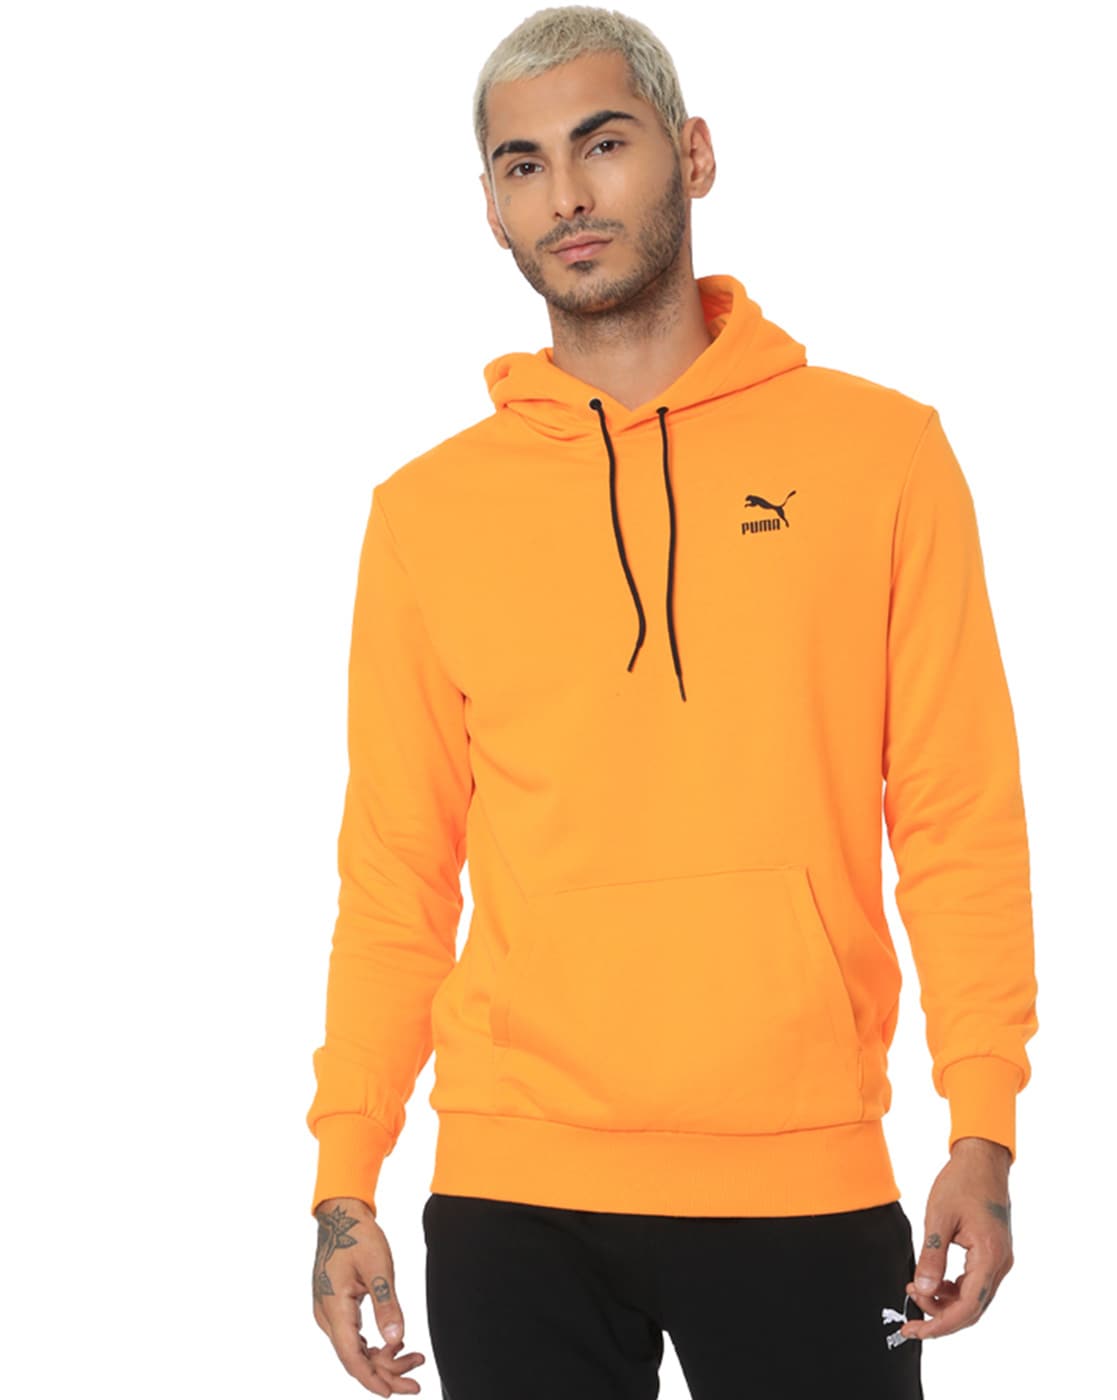 puma orange sweatshirt